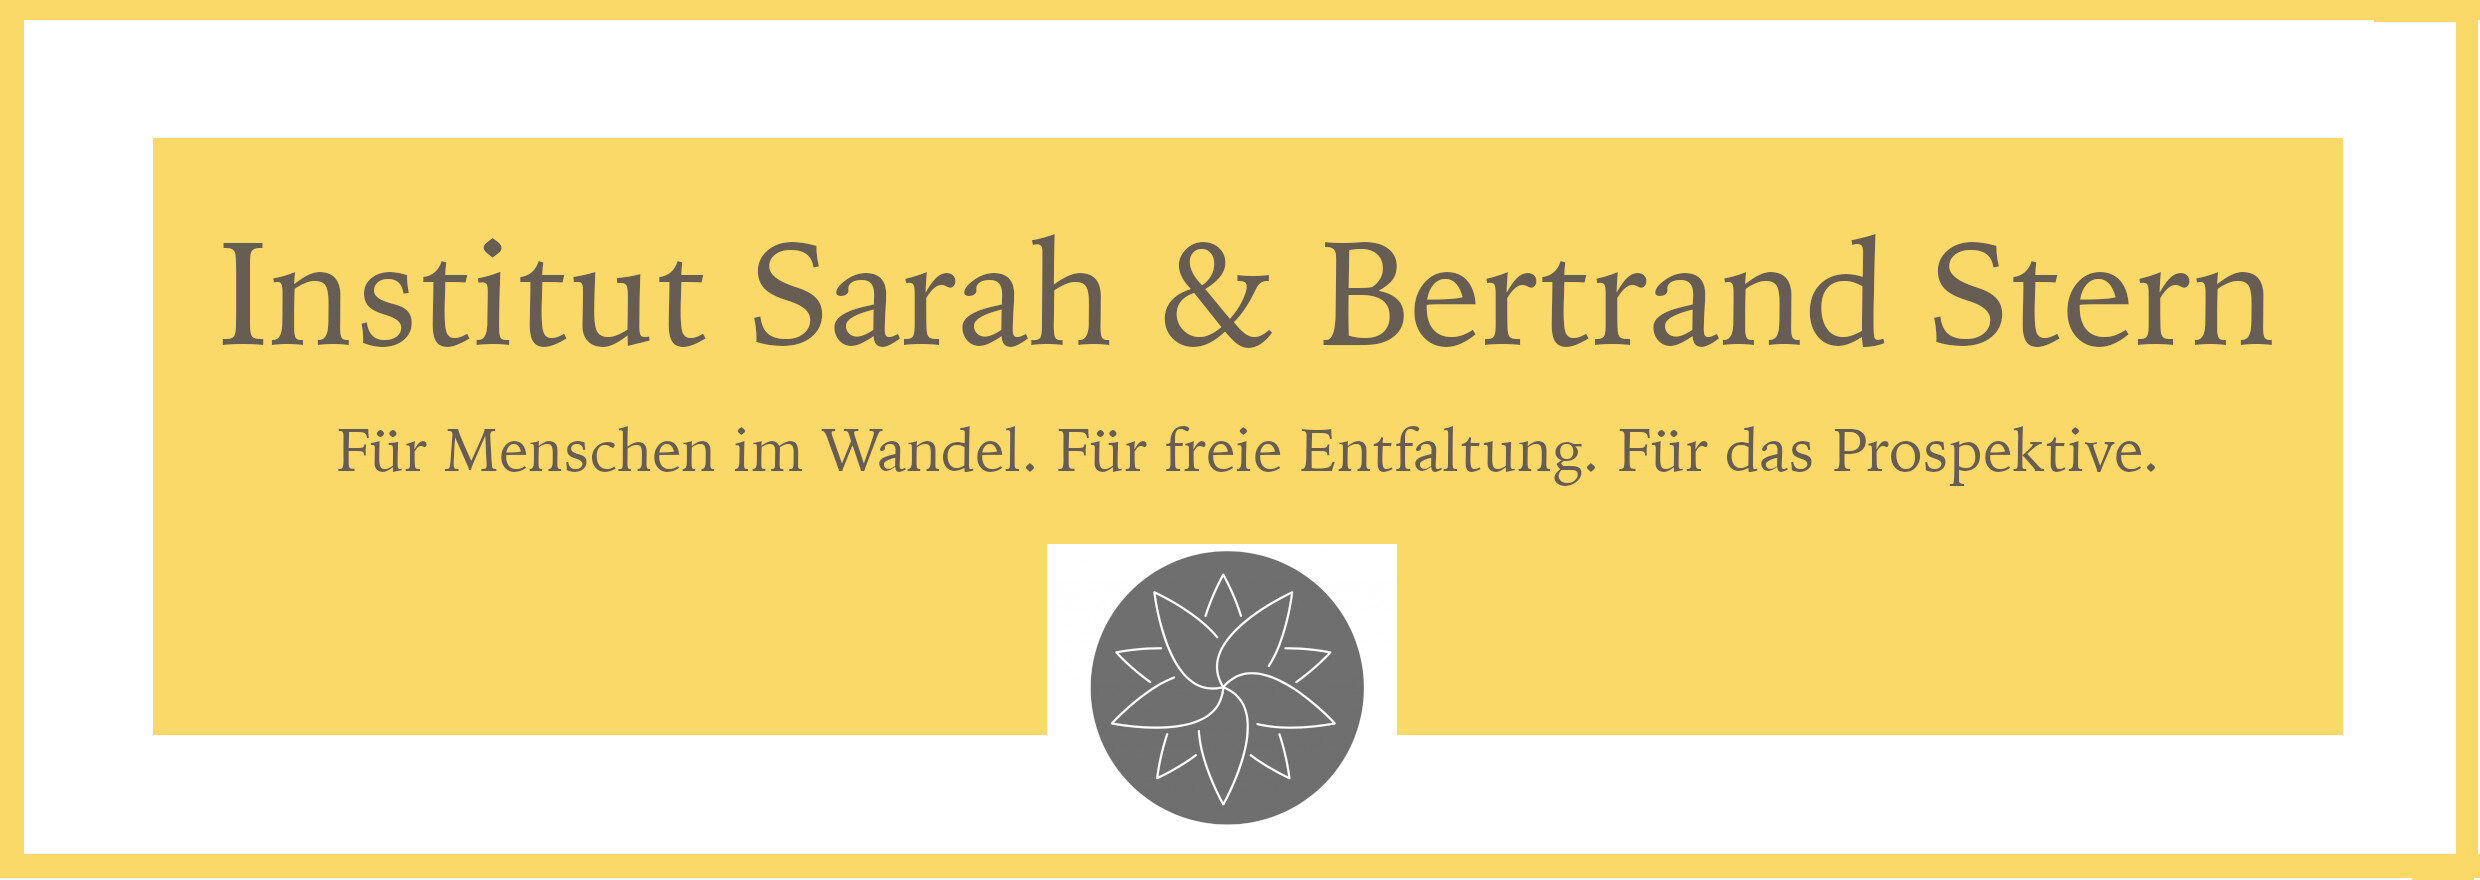 Institut Sarah & Bertrand Stern